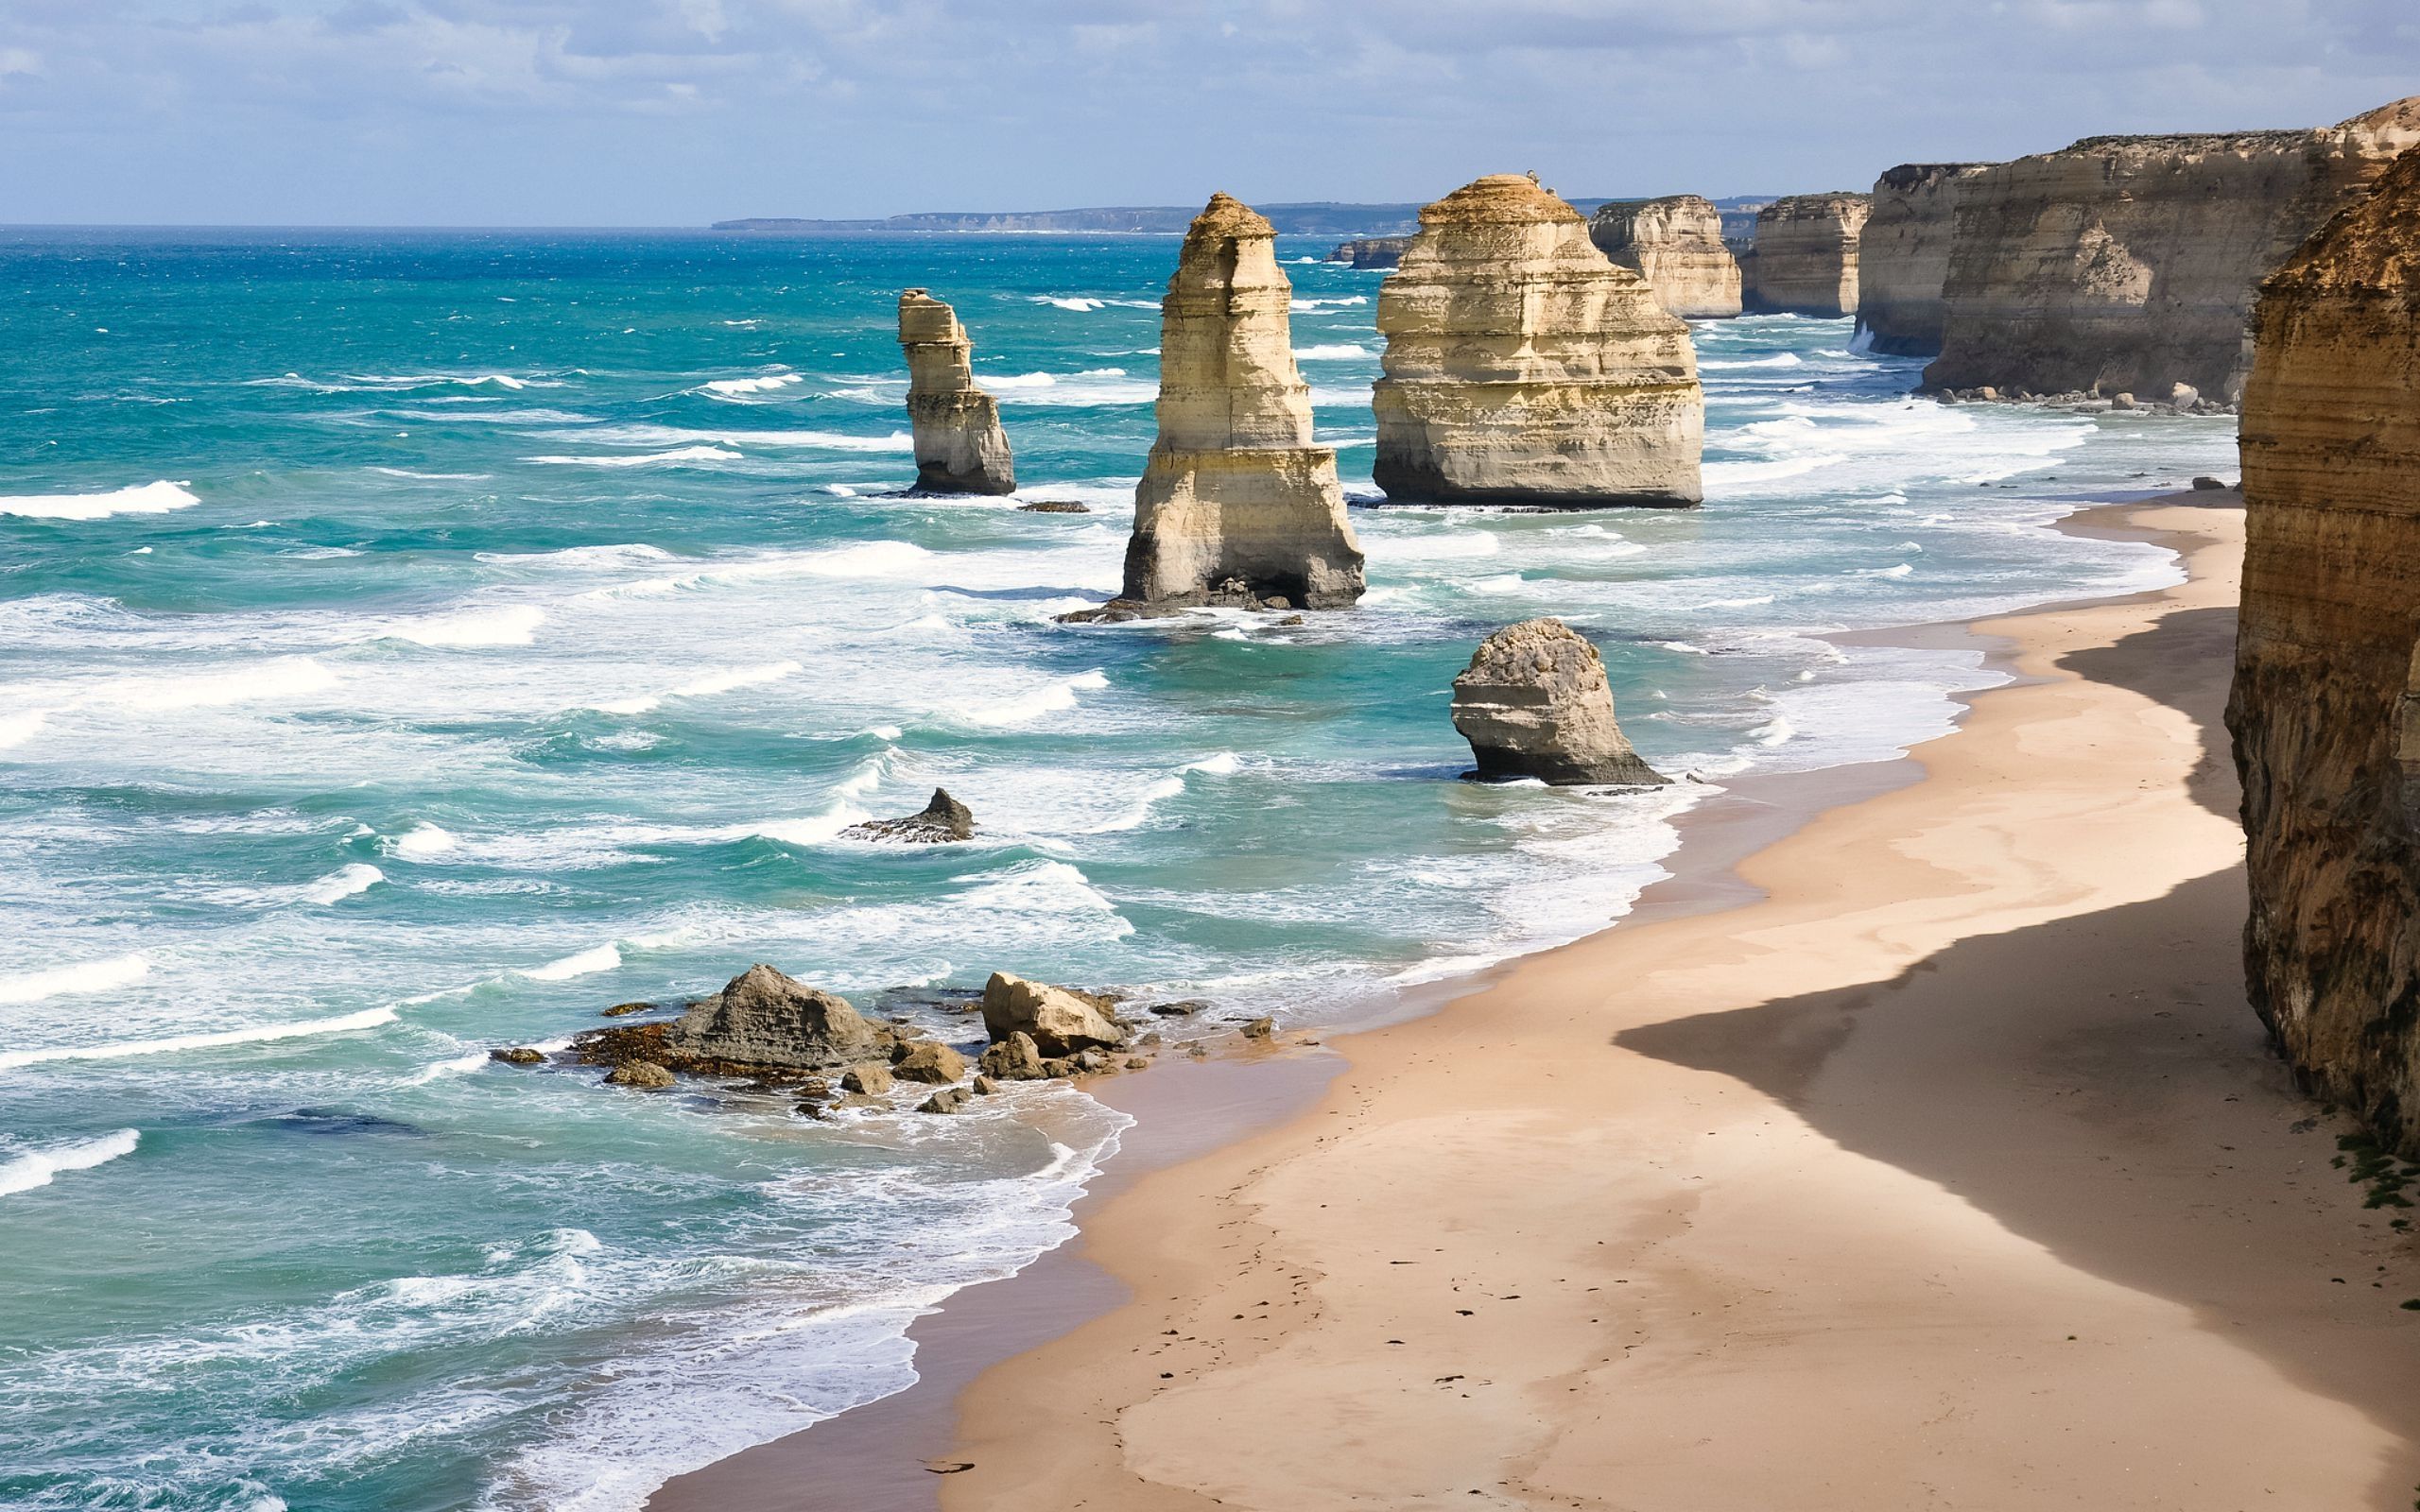 C coast. Пляж Пирриви Австралия. Австралия океан скалы. Австралия океанское побережье. Австралийское побережье тихий океан.